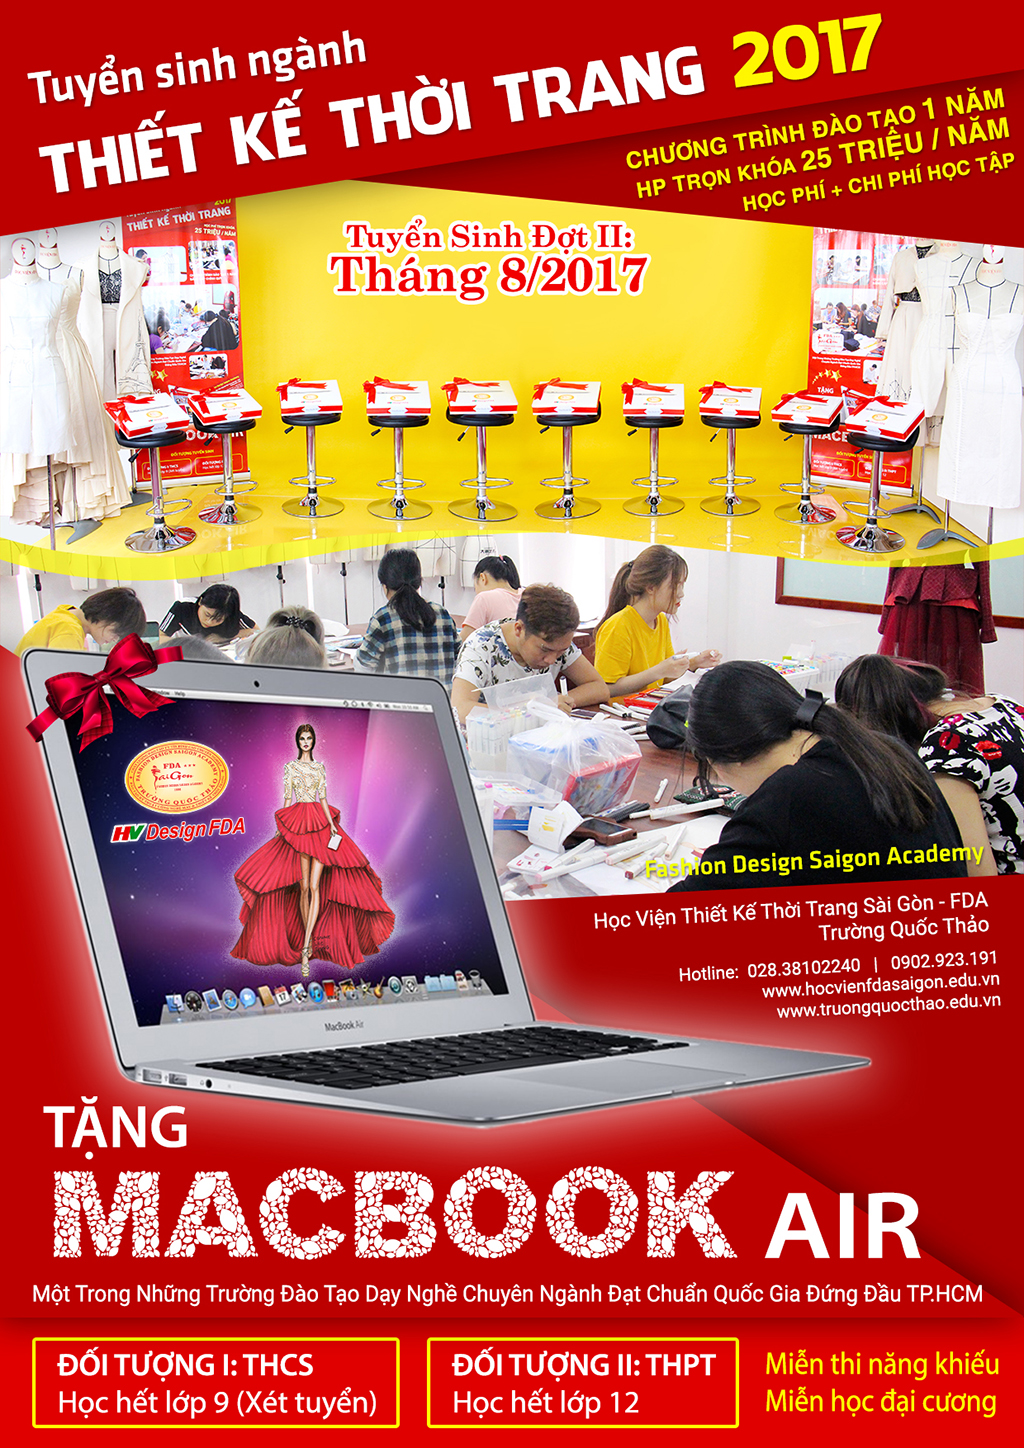 tuyen-sinh-nganh-thiet-ke-thoi-trang-thang-7-2017-tang-Macbook.jpg